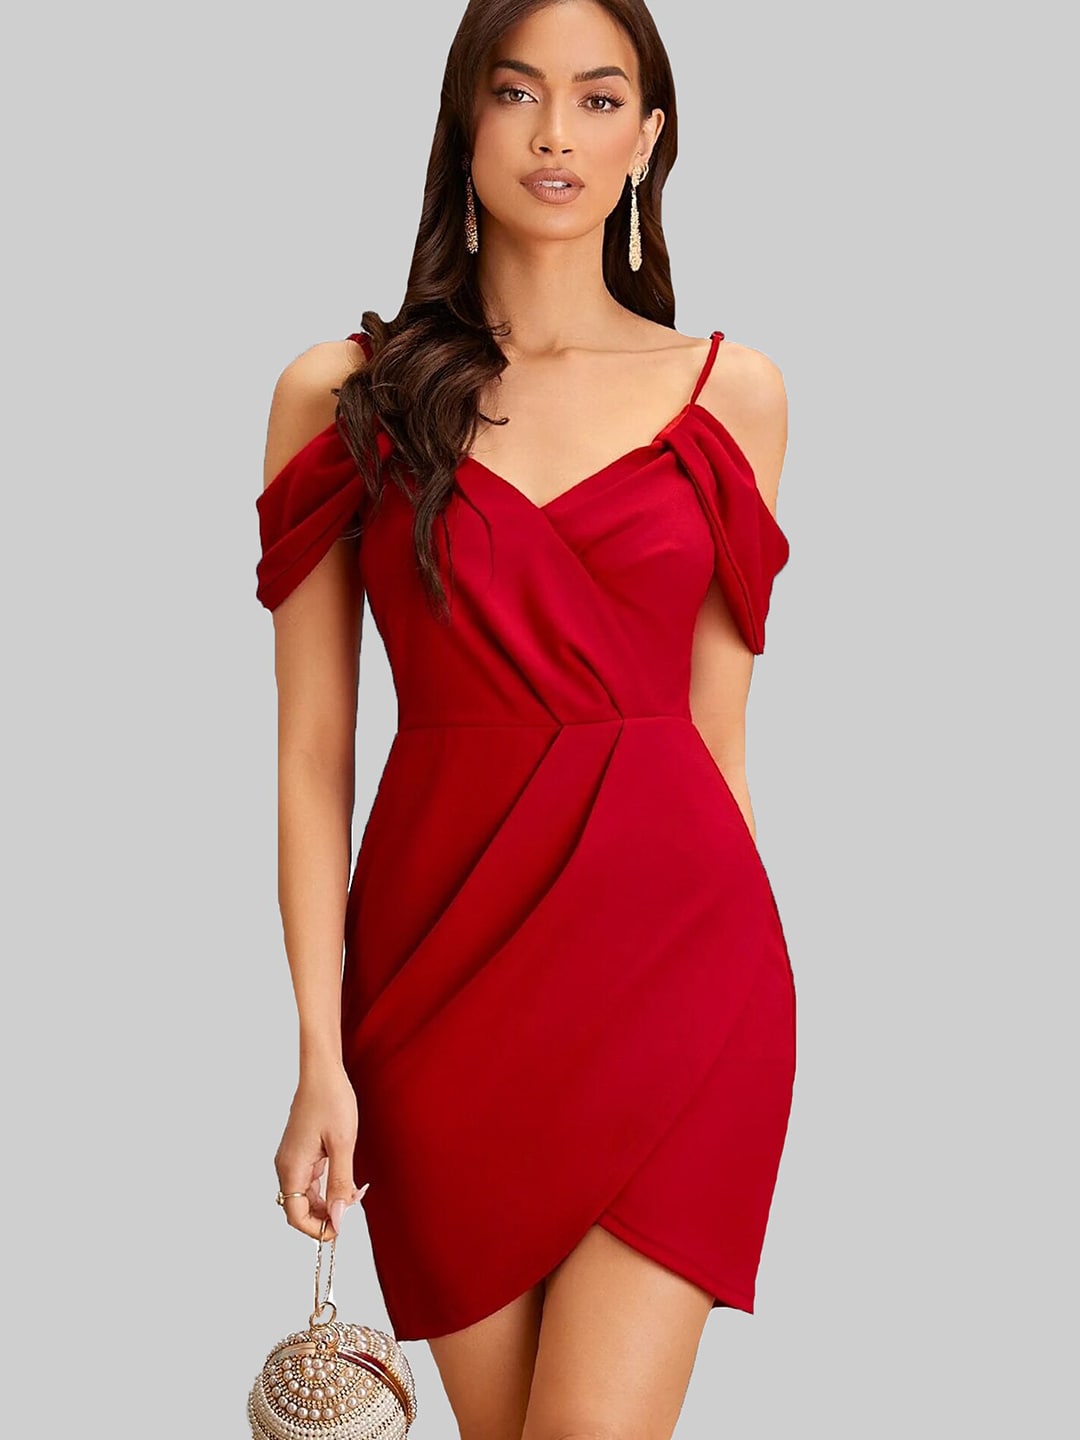 ADDYVERO Women Red Mini Dress Price in India